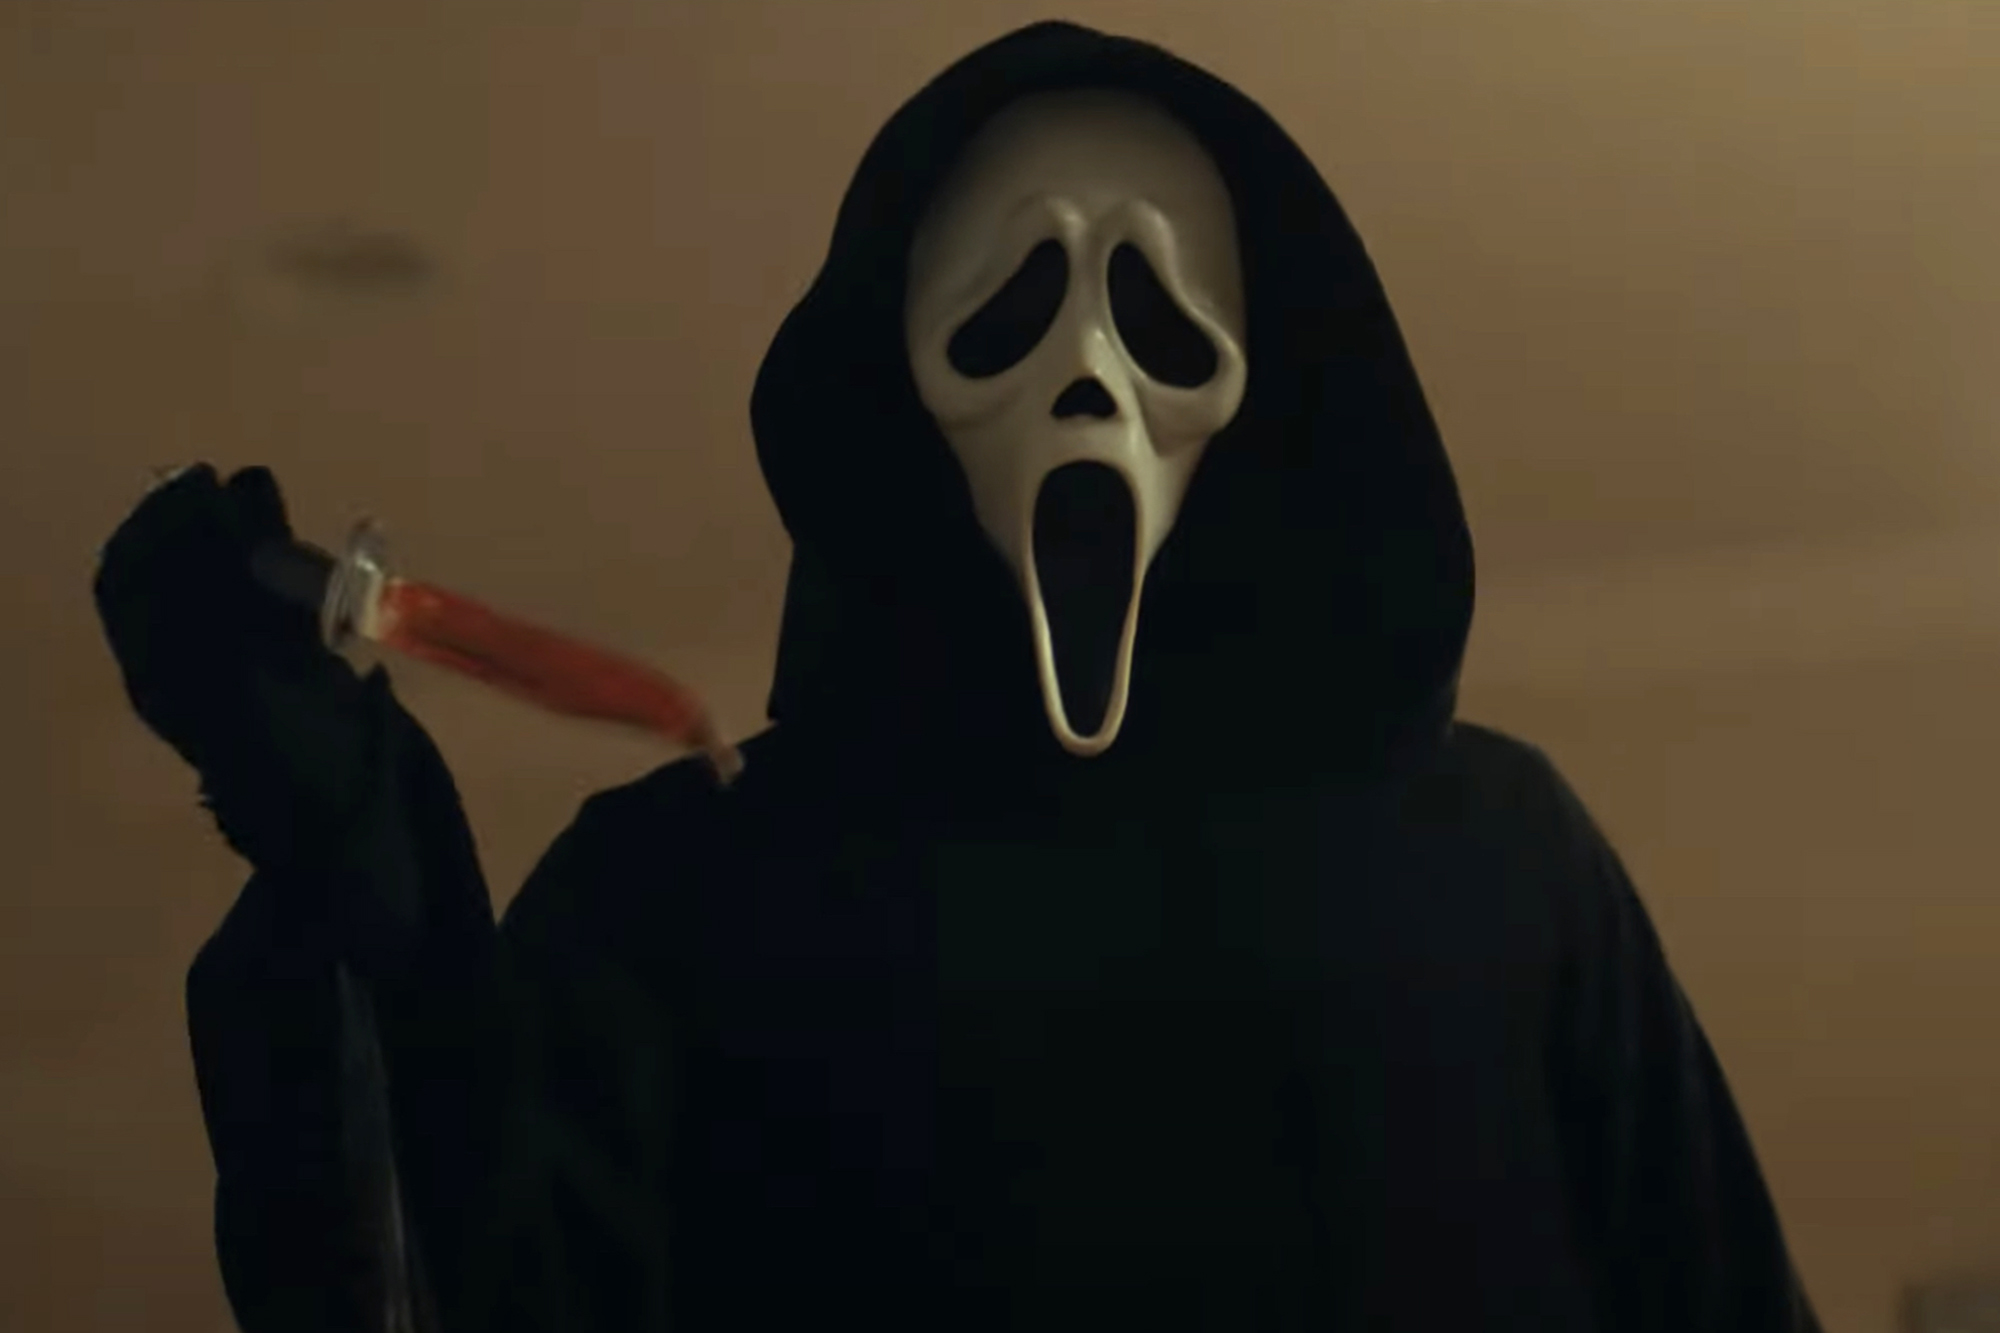 Scream' fans go wild as trailer for new film finally drops